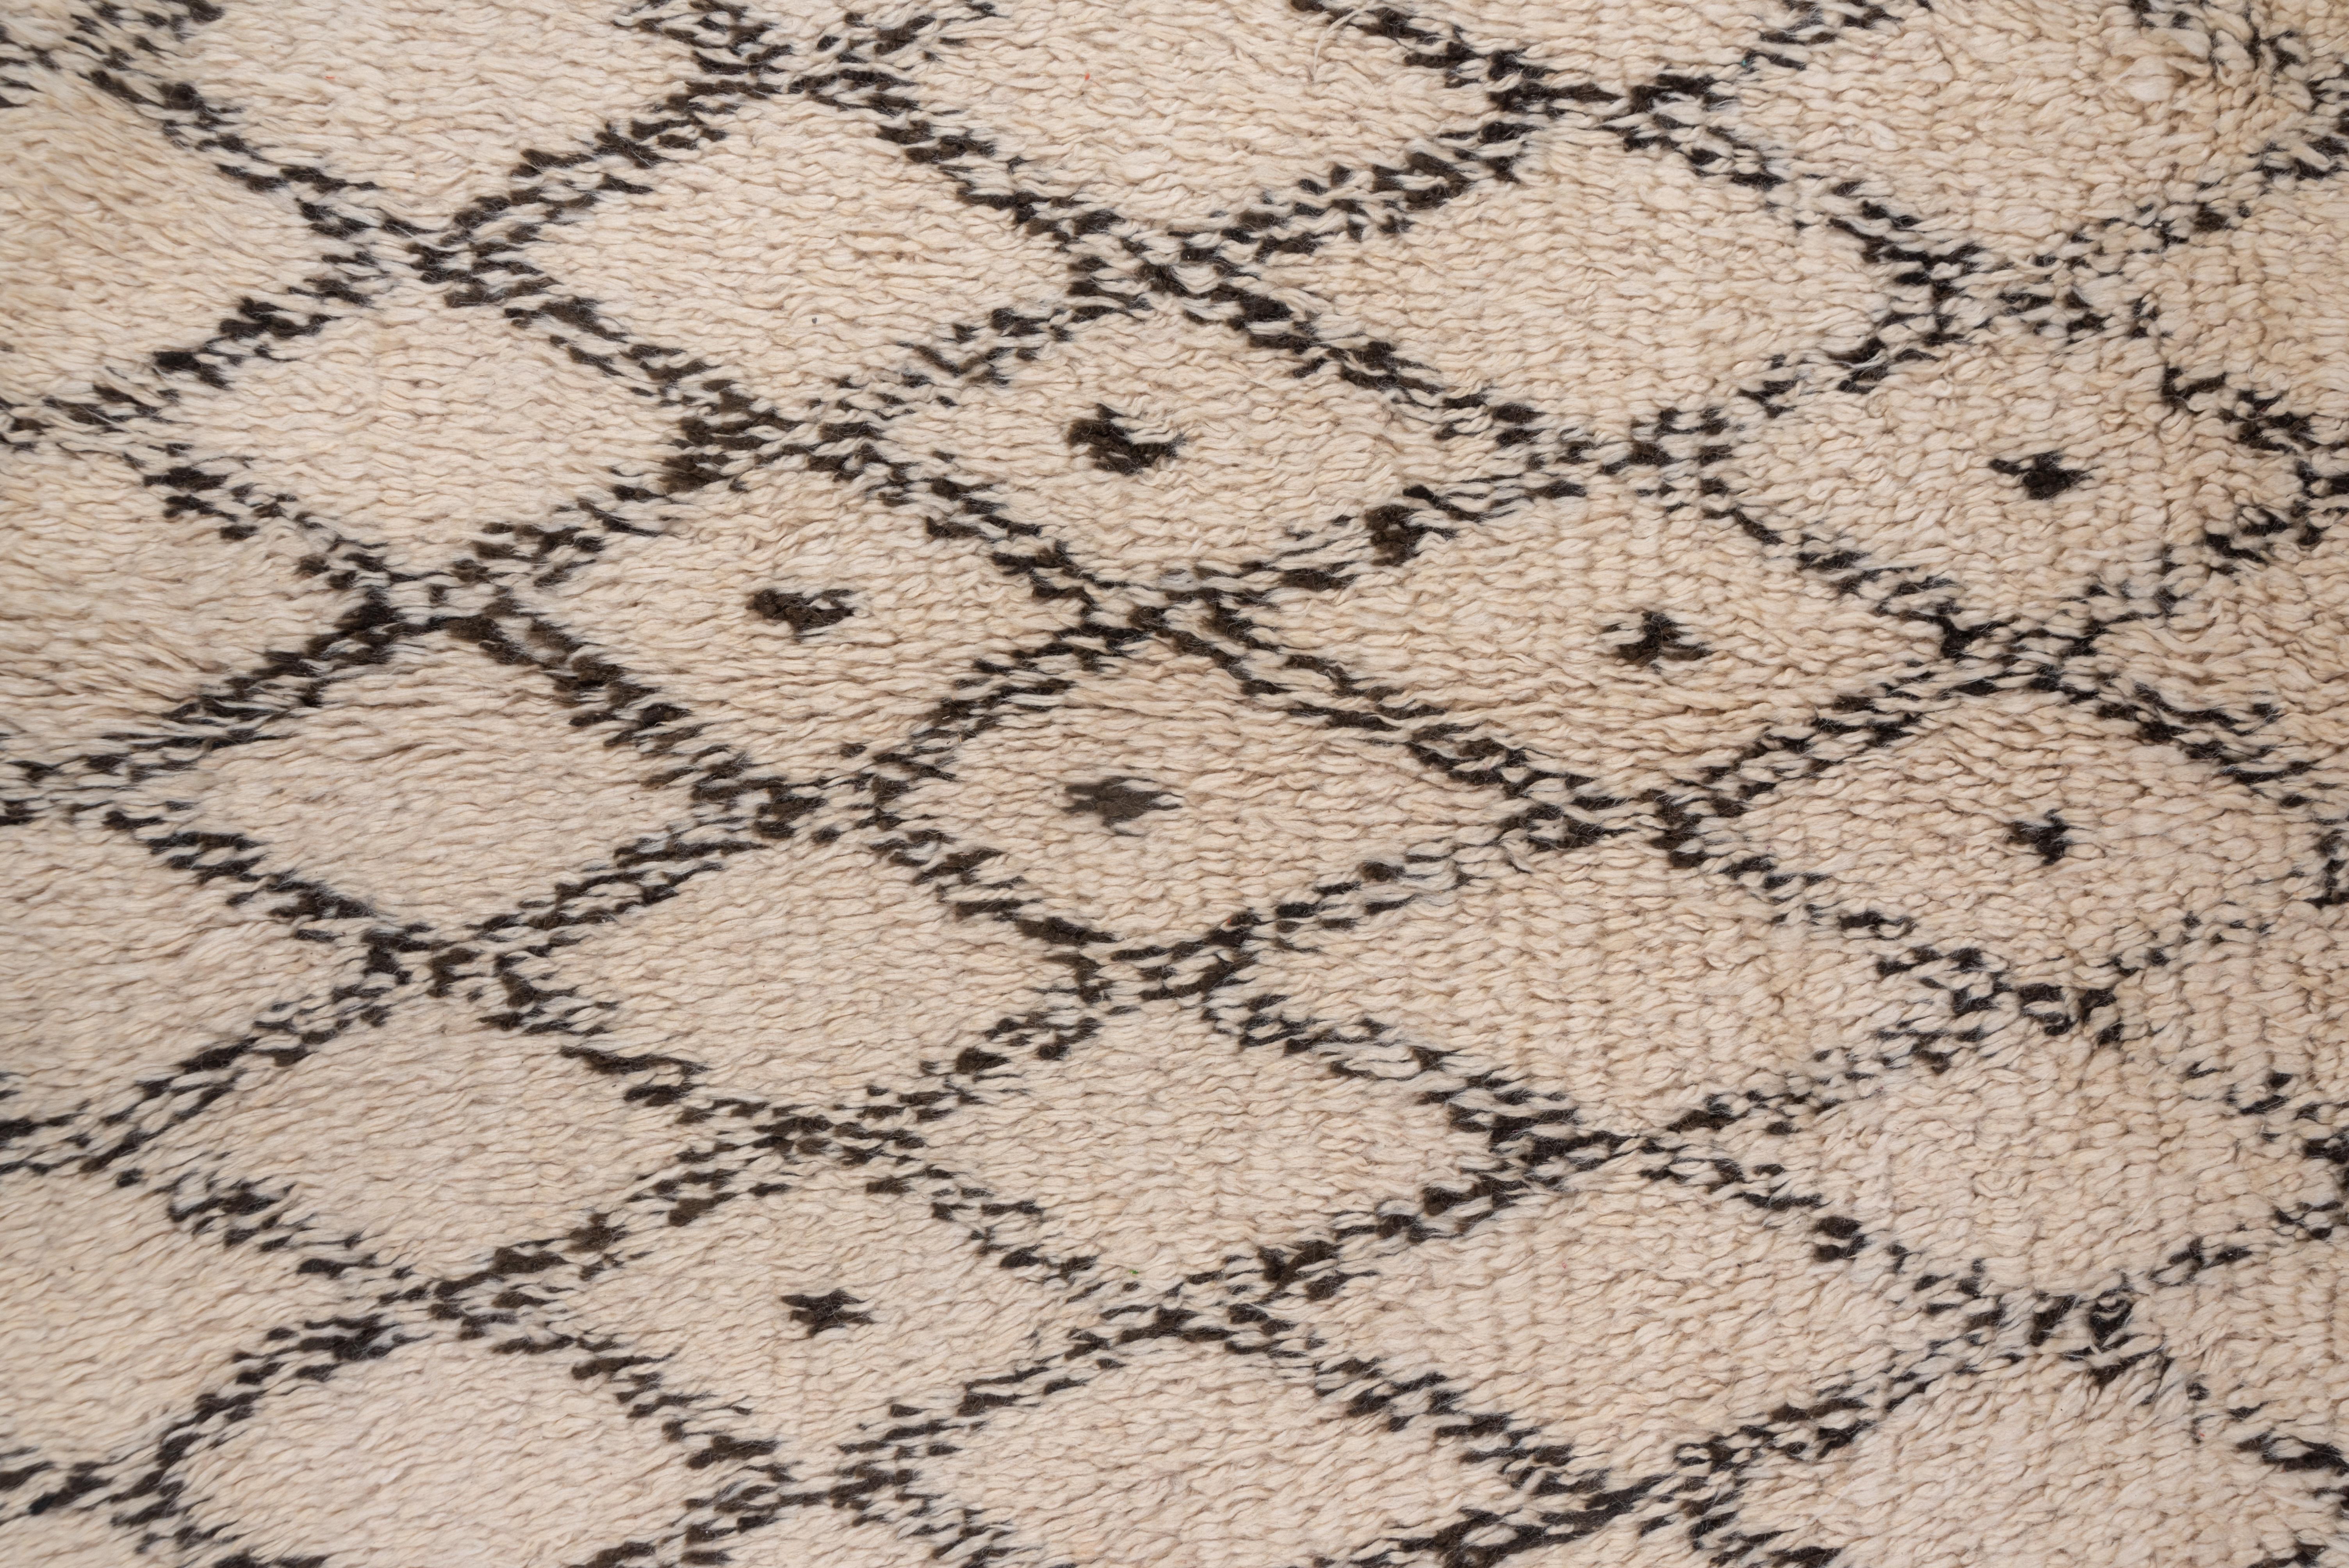 Wool Tribal Middle Atlas Moroccan Carpet, circa 1950s